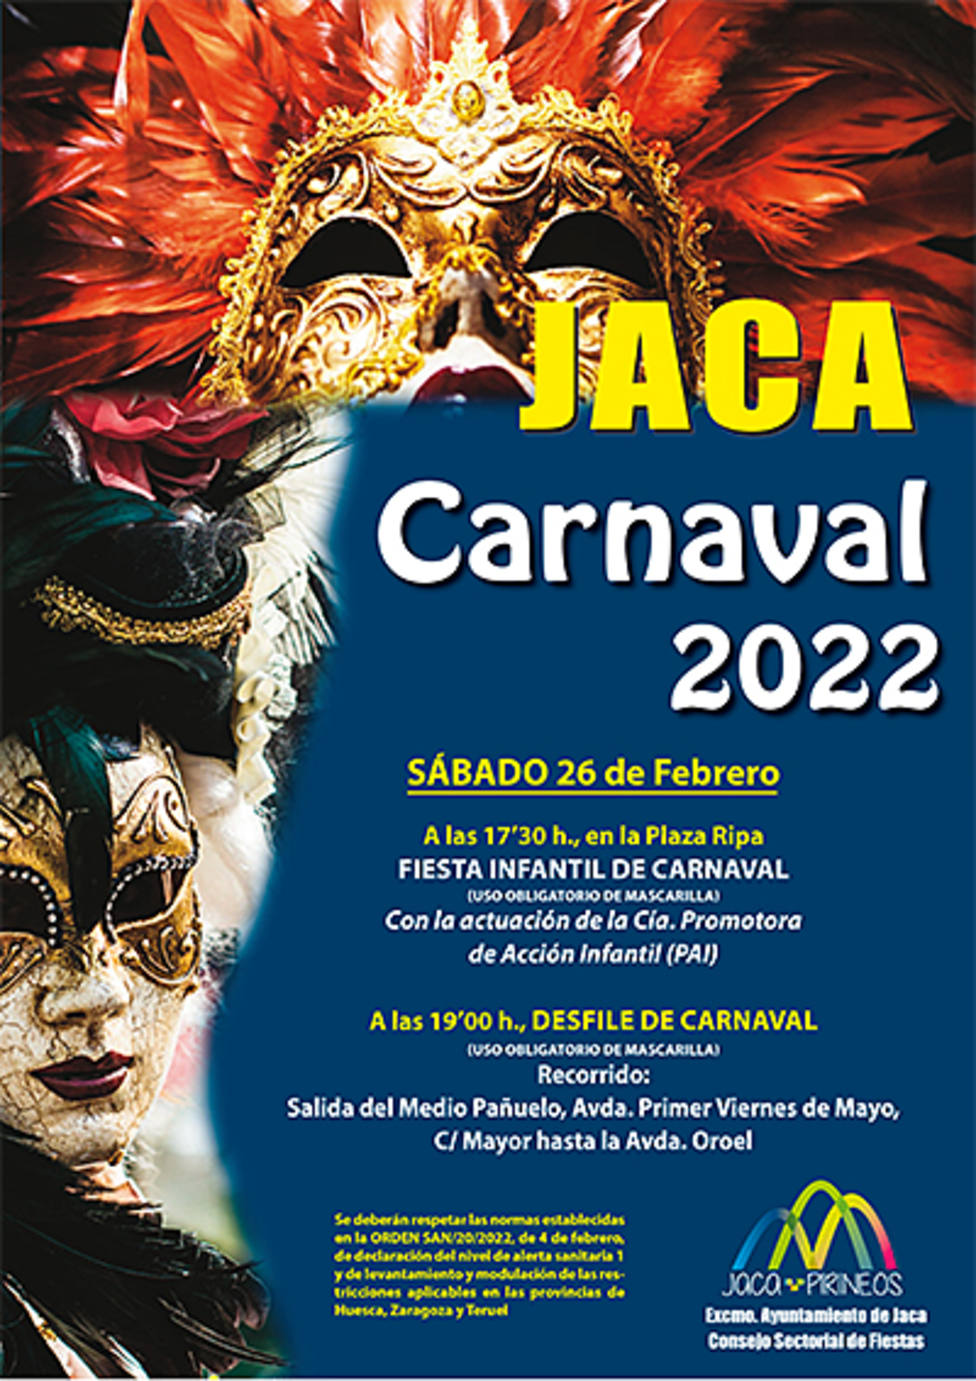 Carnaval Jaca